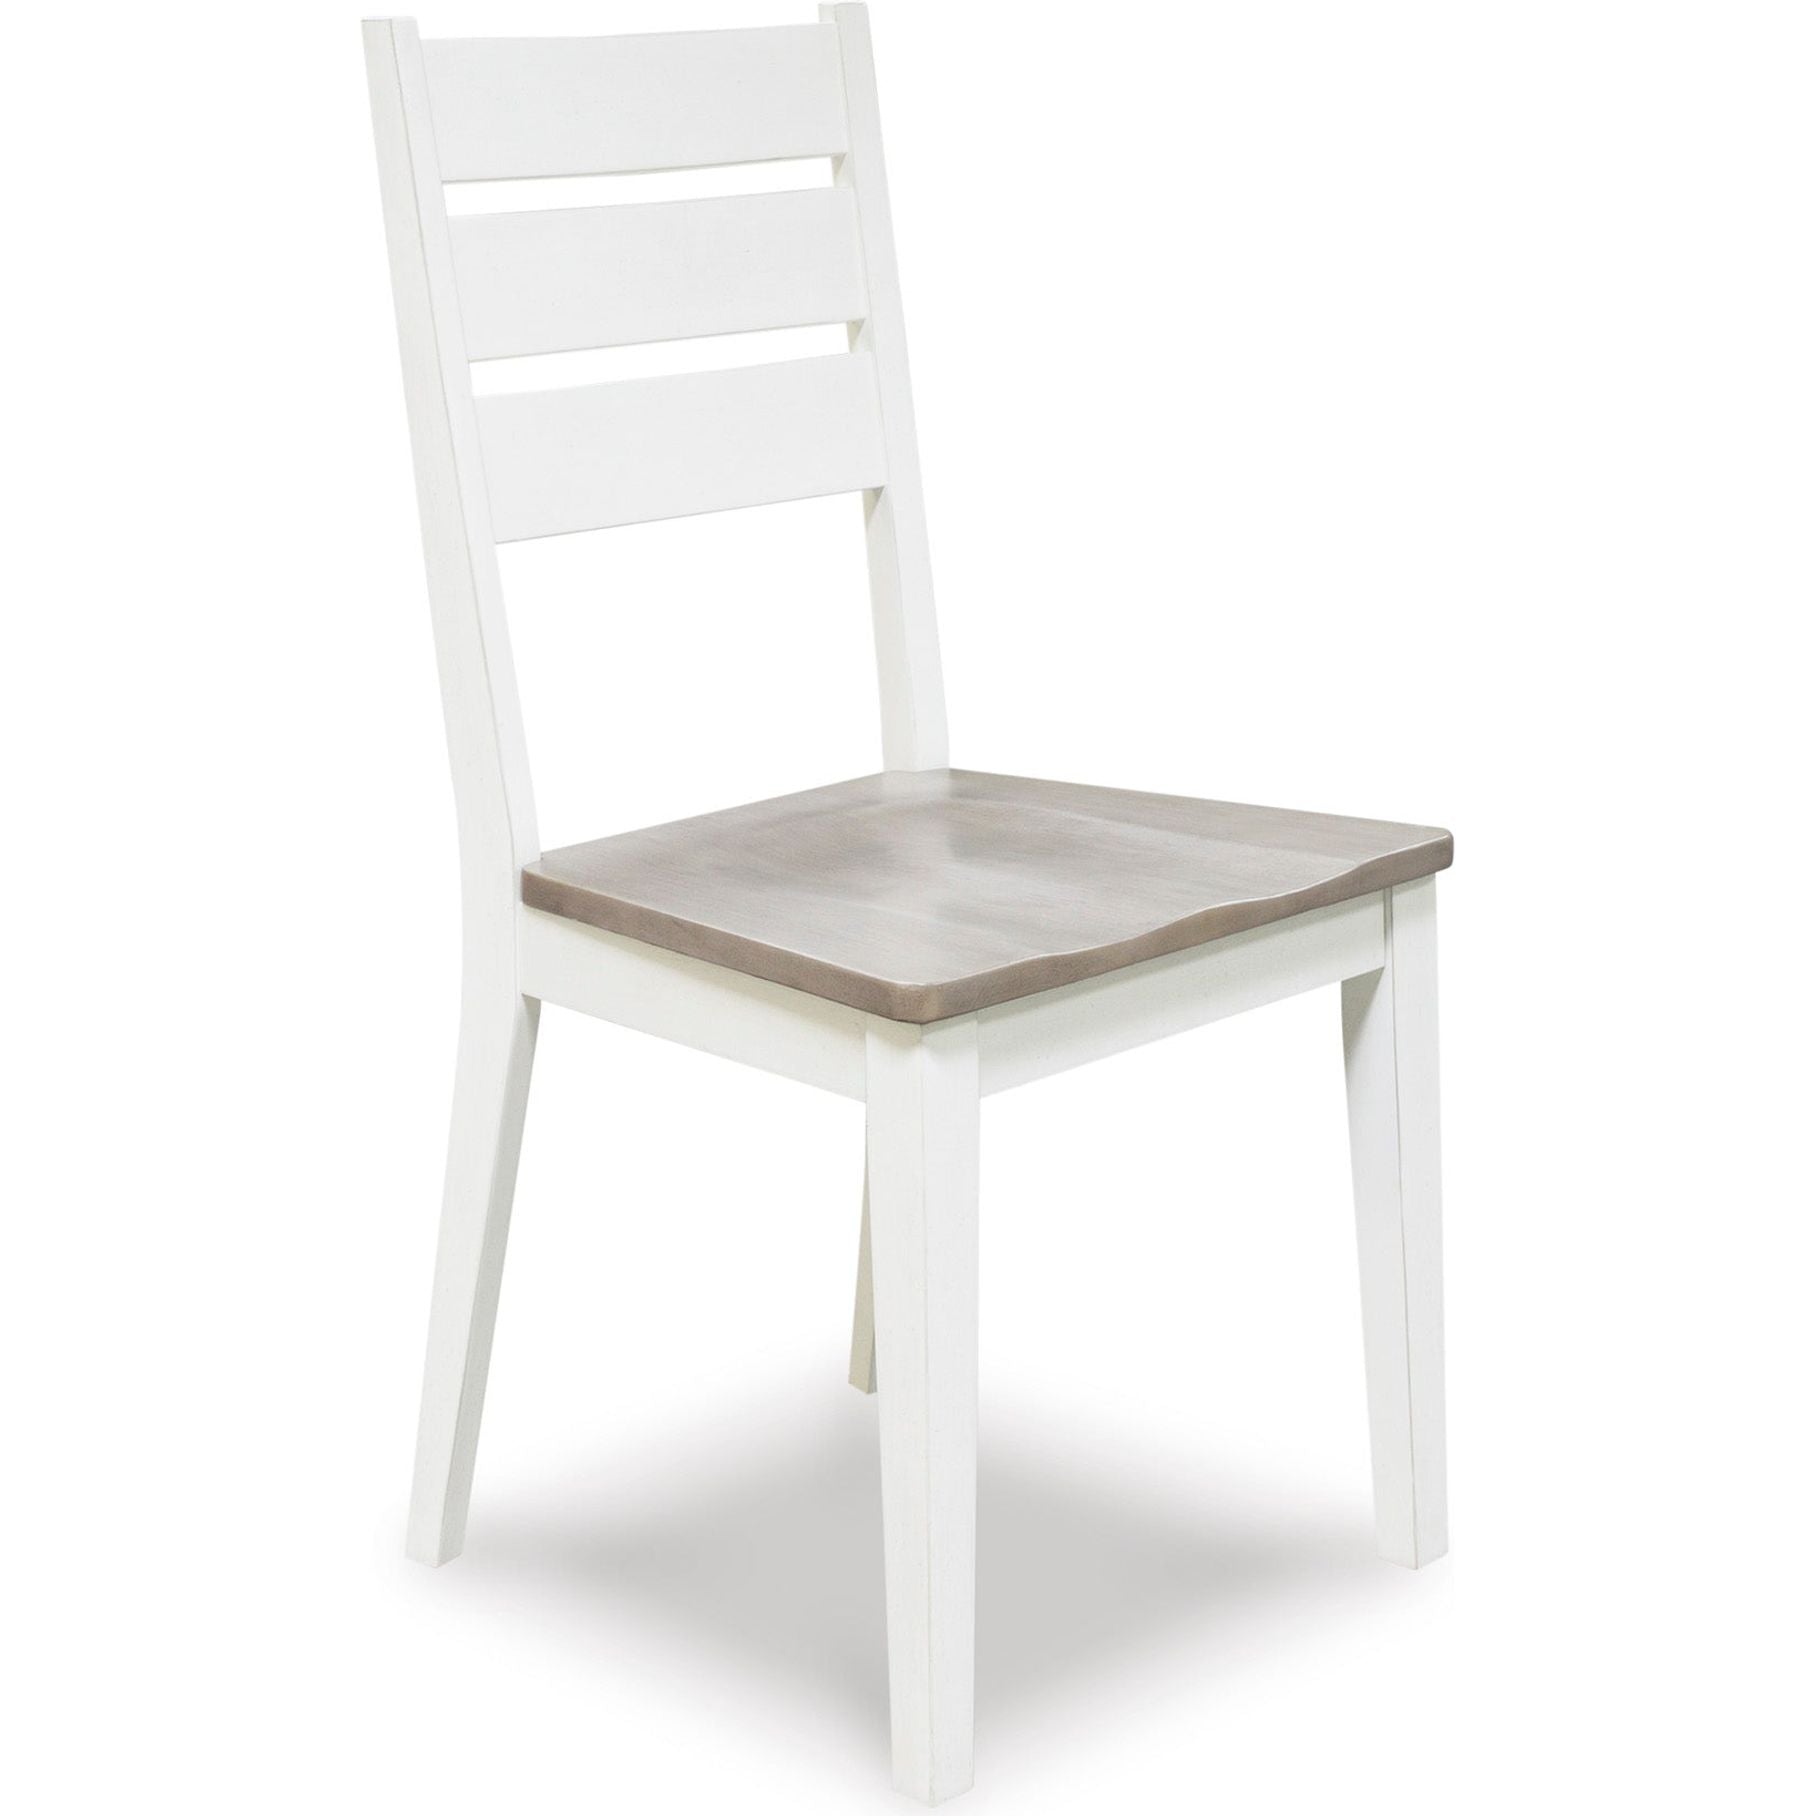 Nollicott Dining Chair